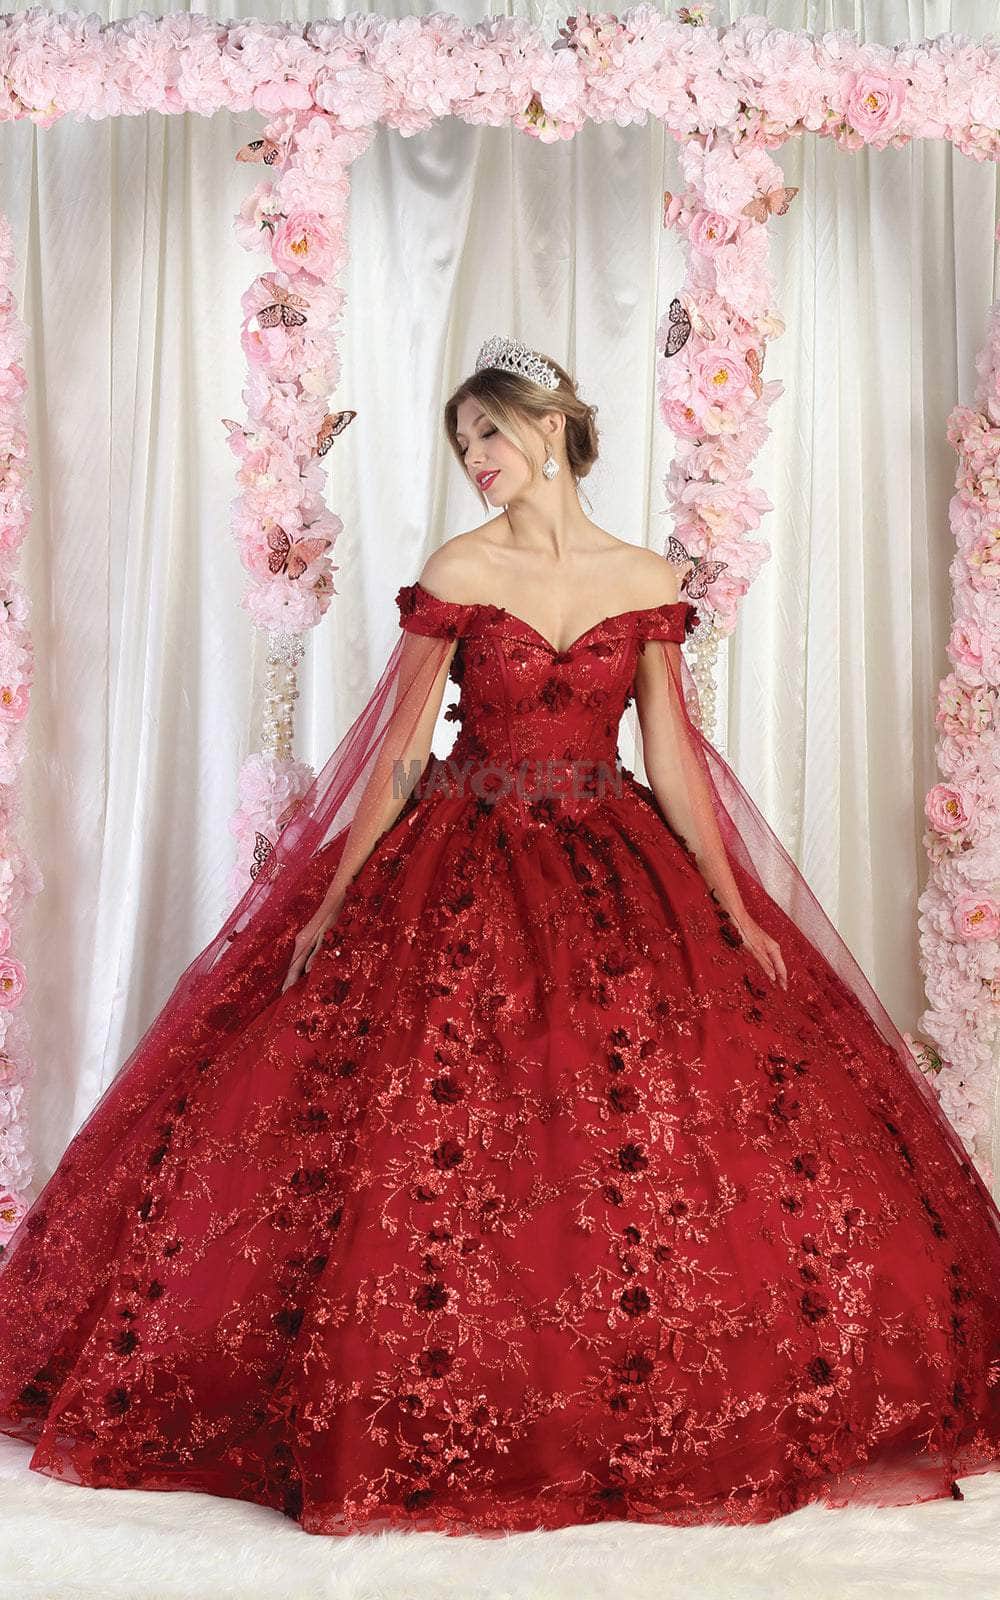 May Queen LK184 - Off-Shoulder 3D Floral Embellished Ballgown Special Occasion Dress